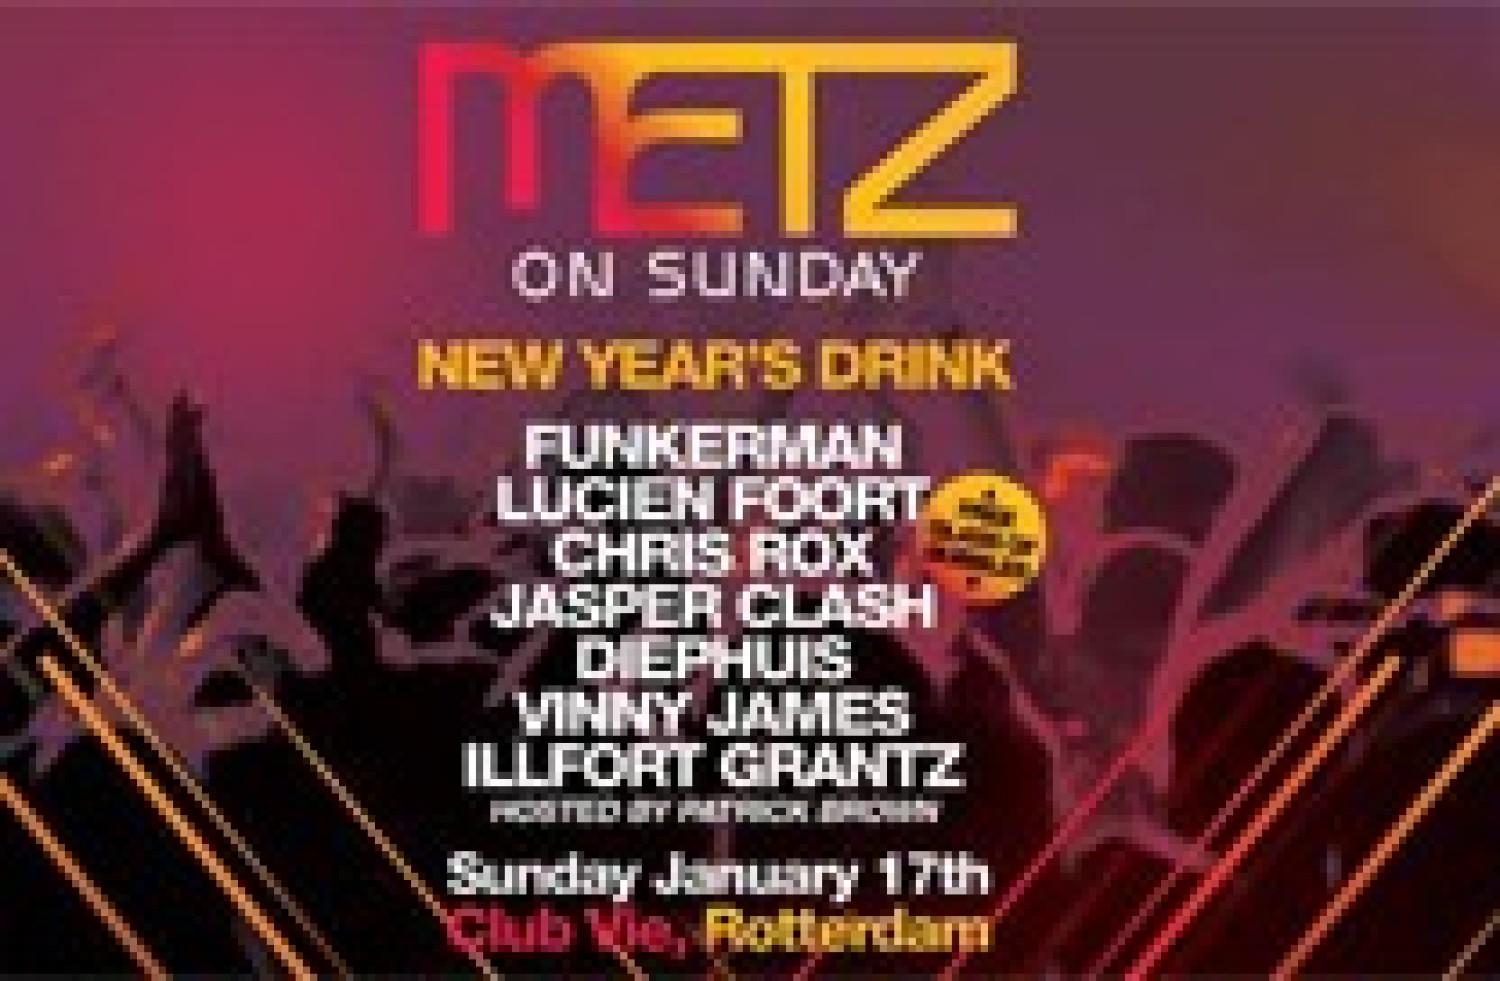 Party nieuws: Metz New Year's Drink, zondag 17 januari in Club Vie